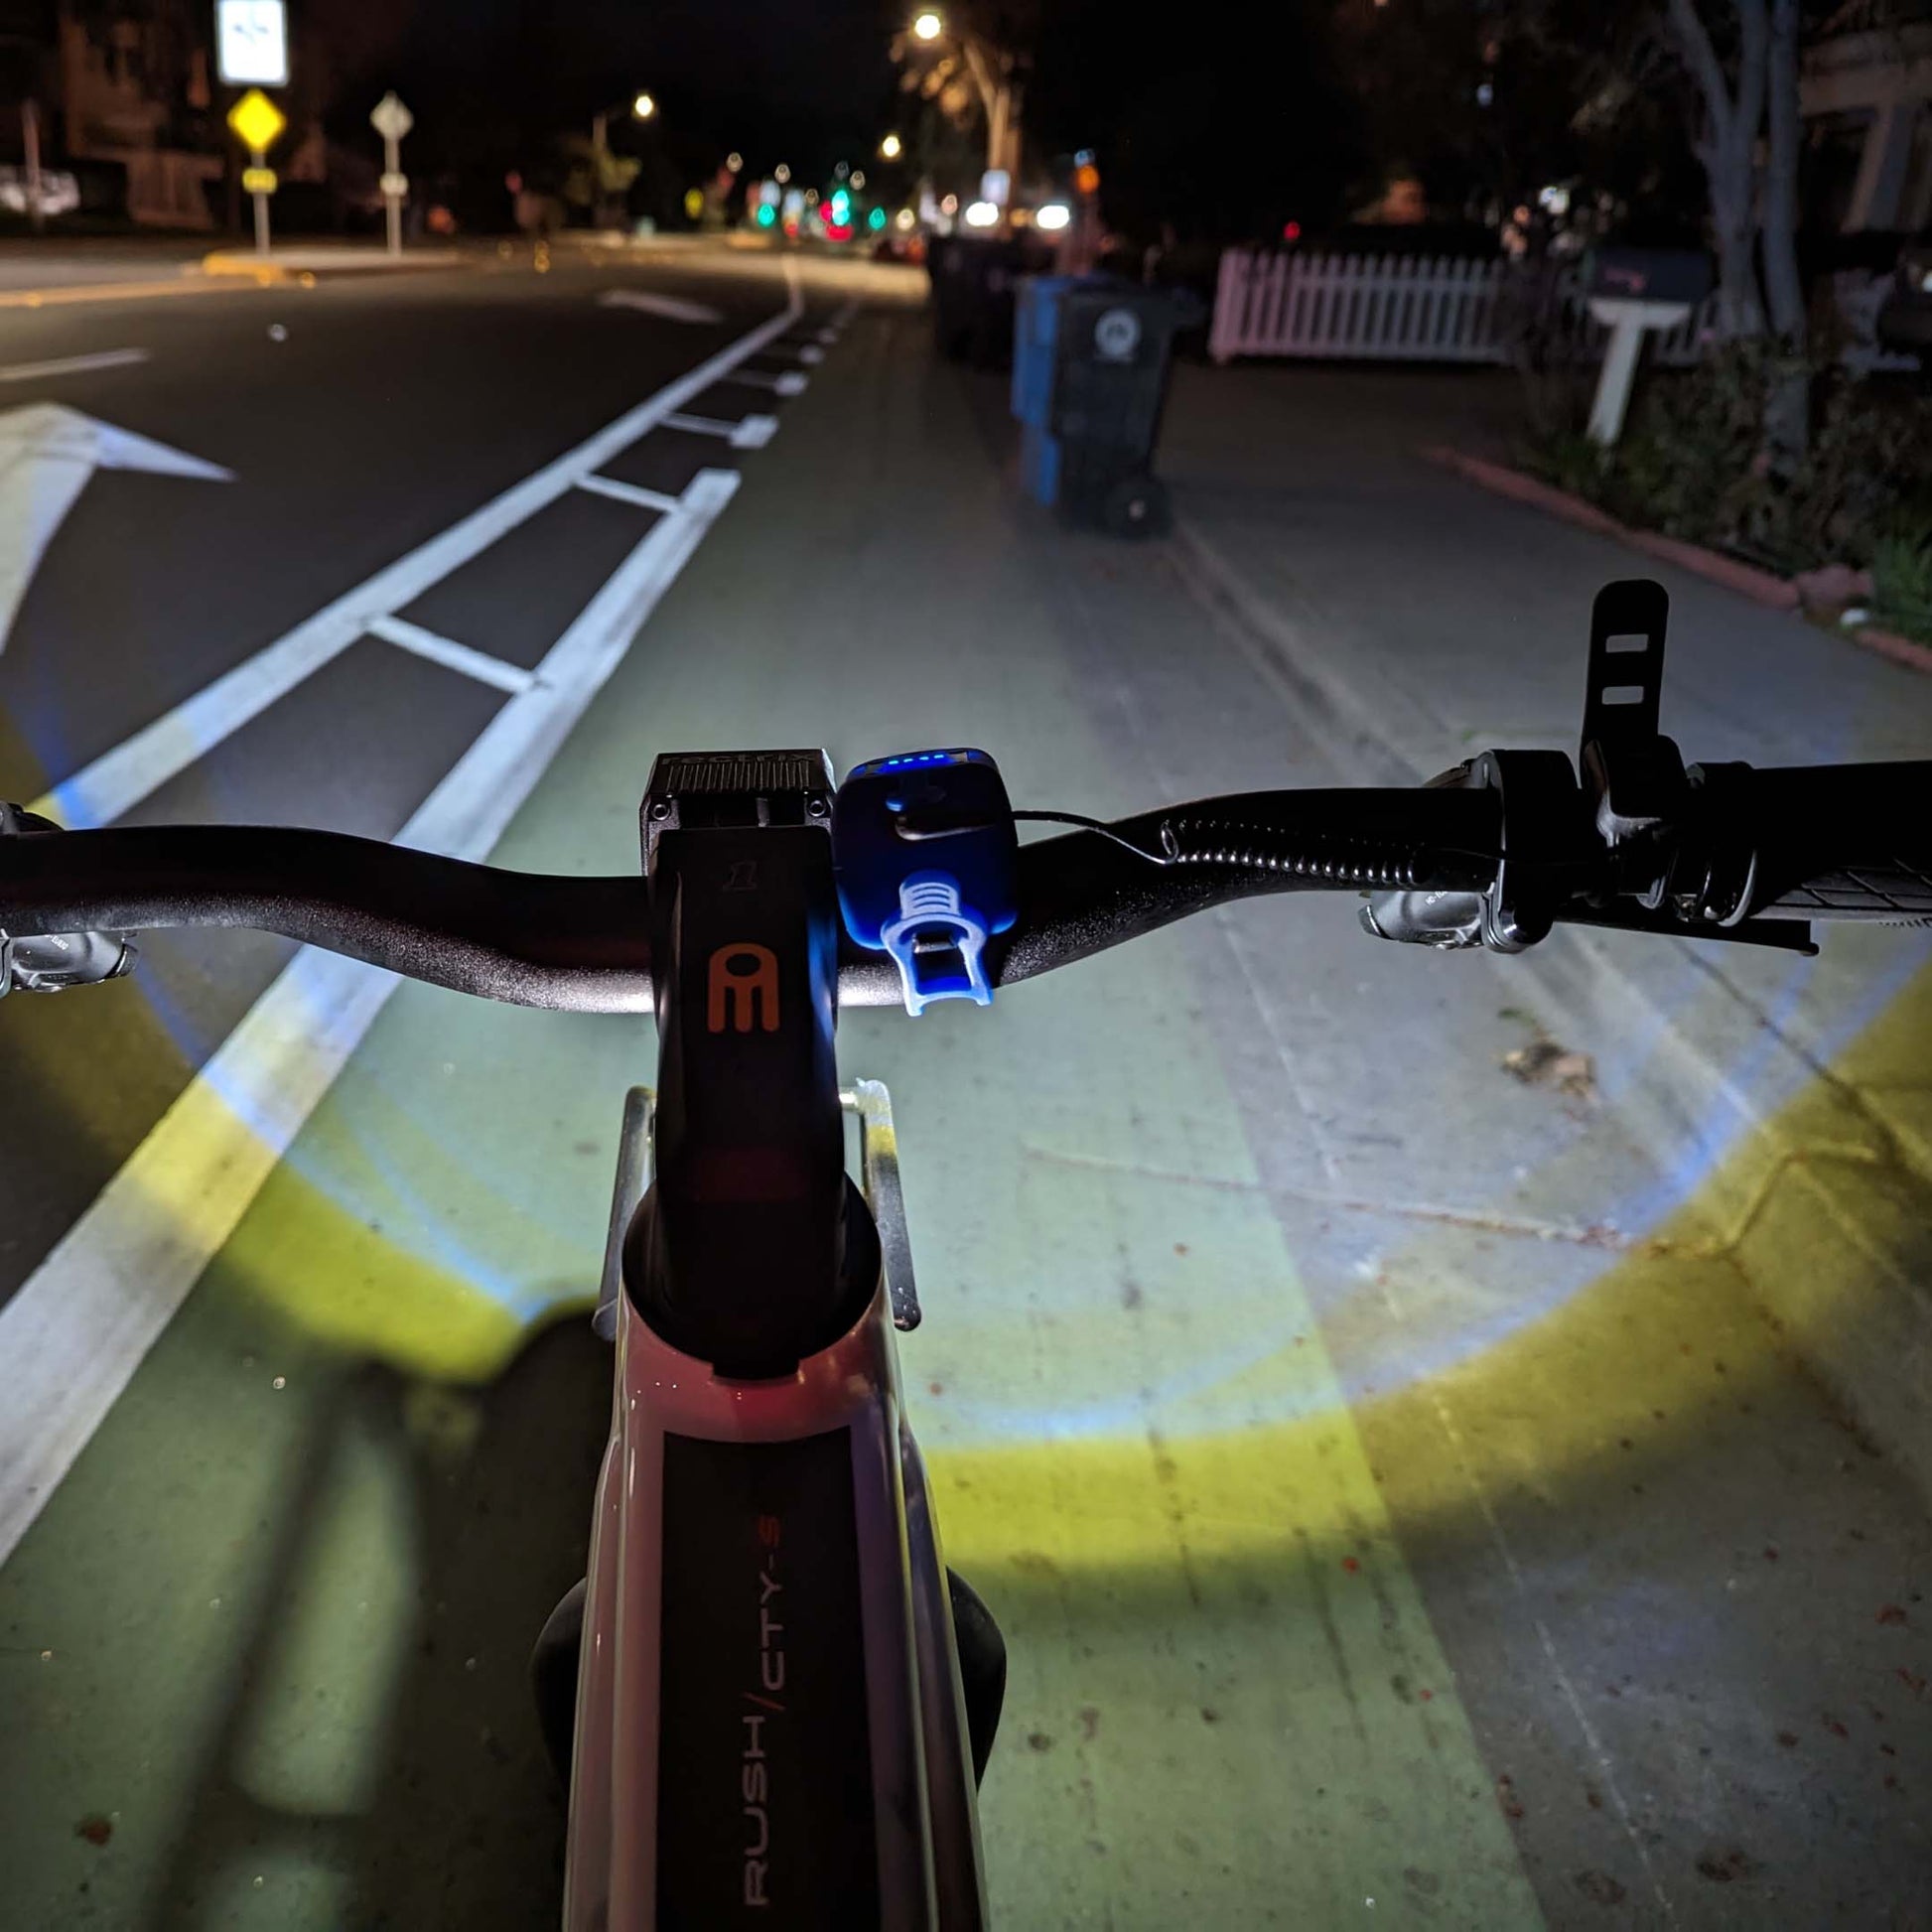 POV of the product's brightness on a dark bike lane at night